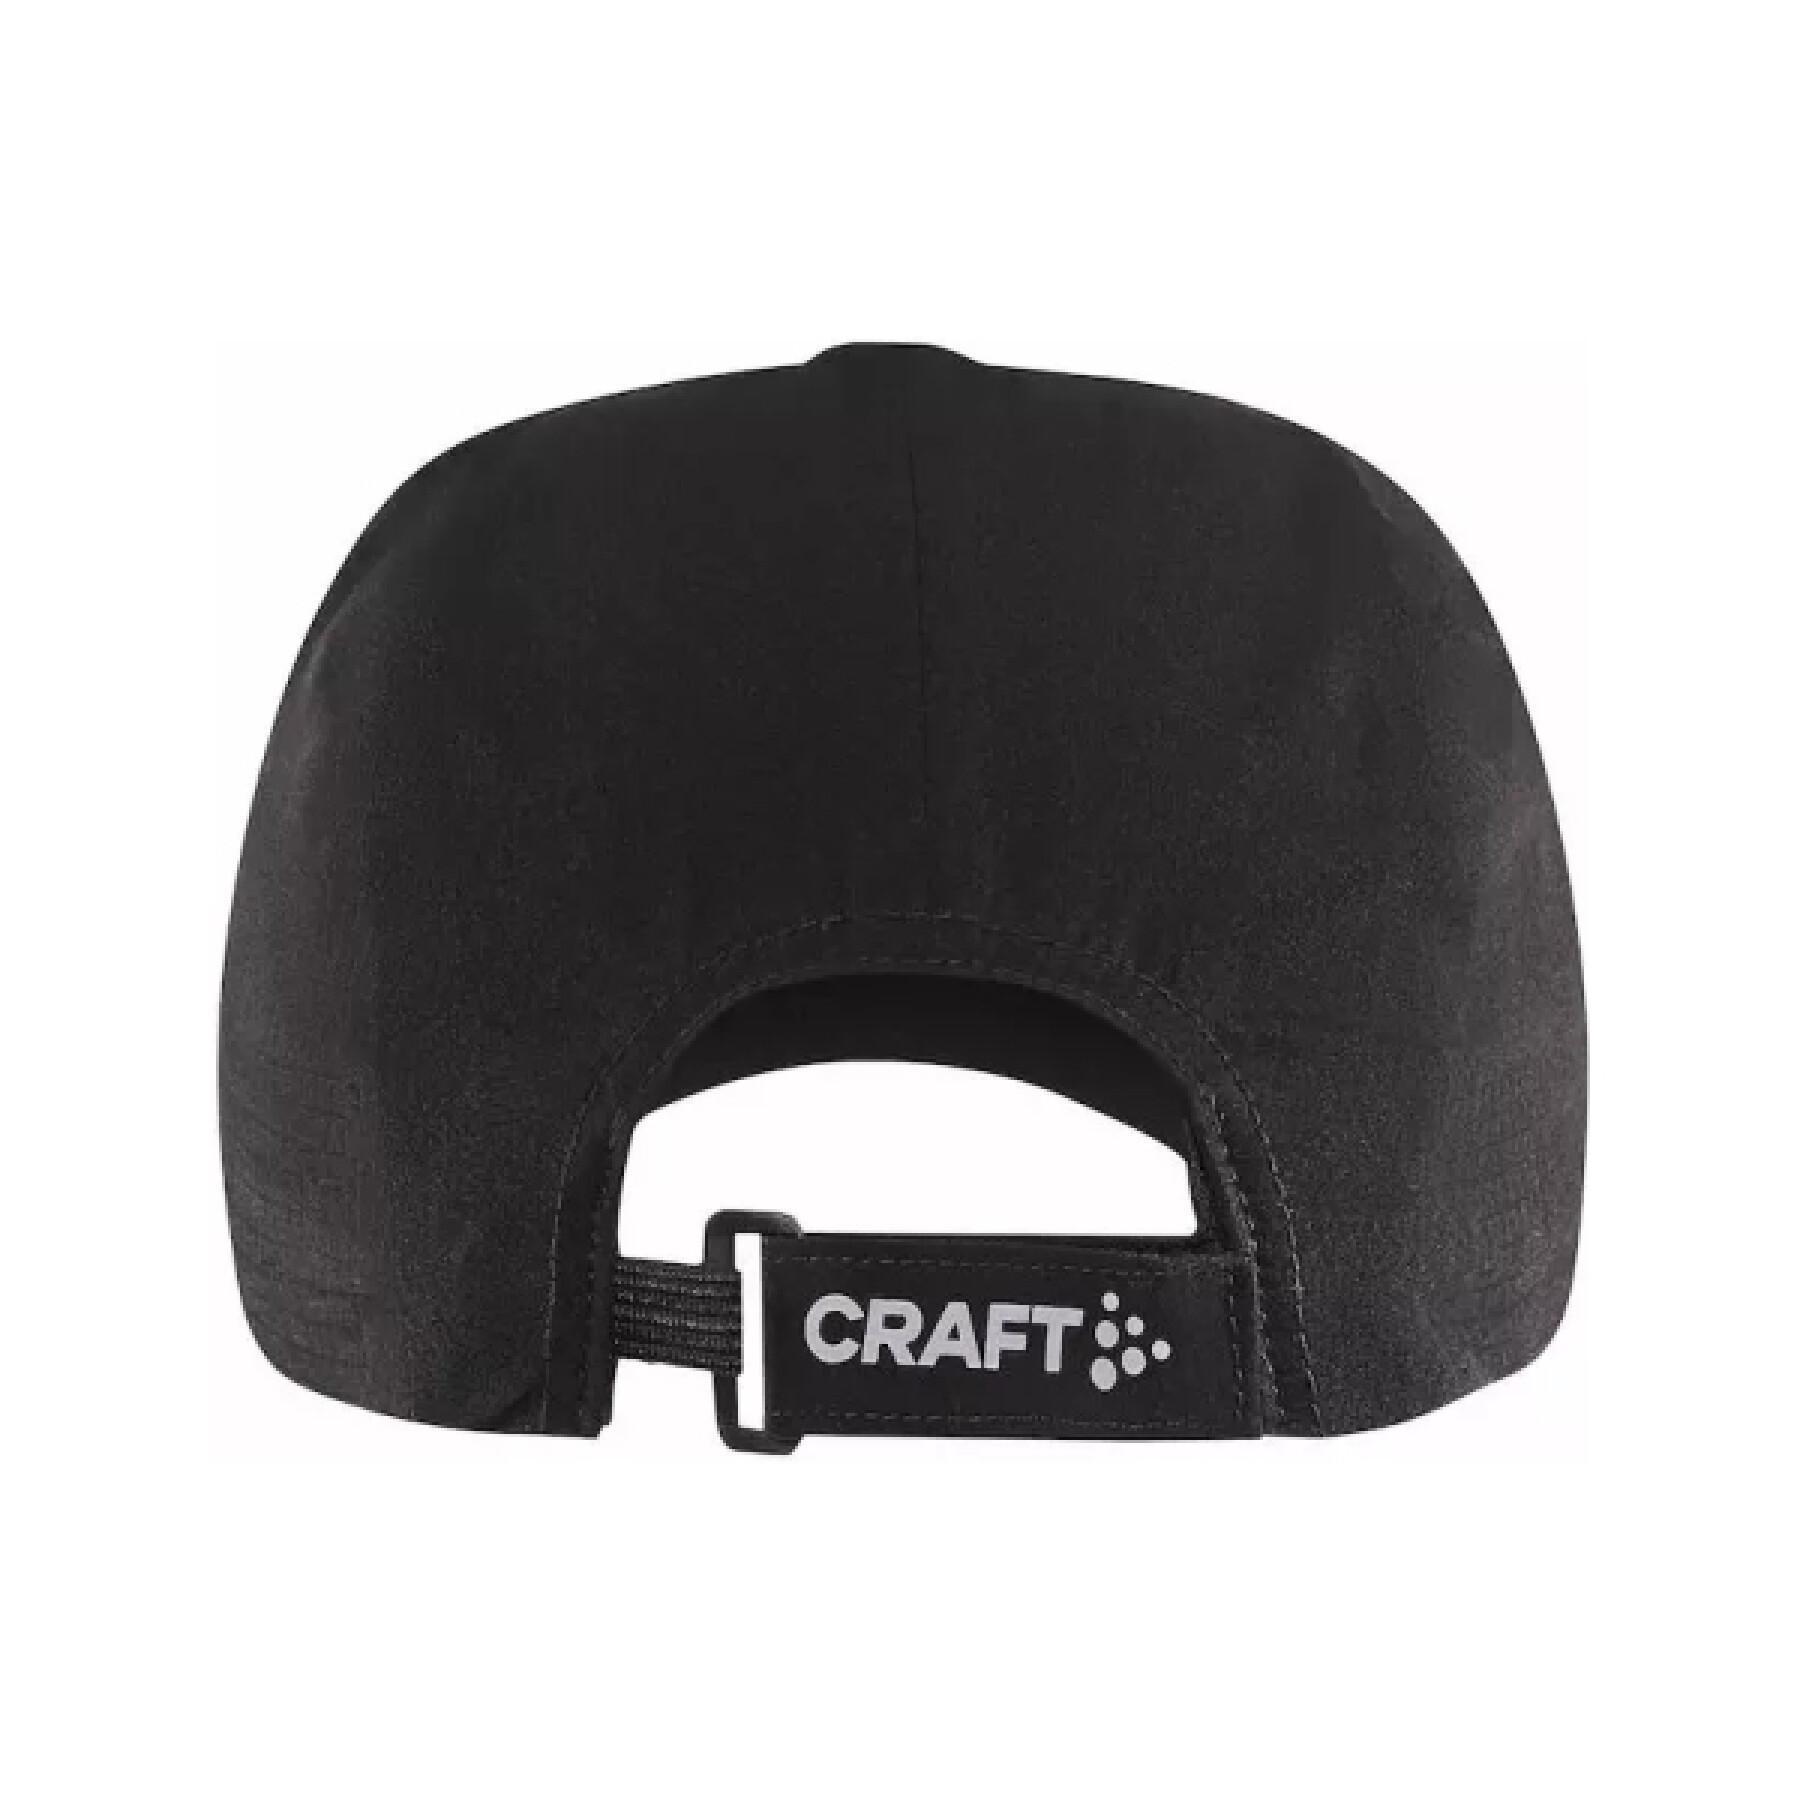 Pro run cap Craft